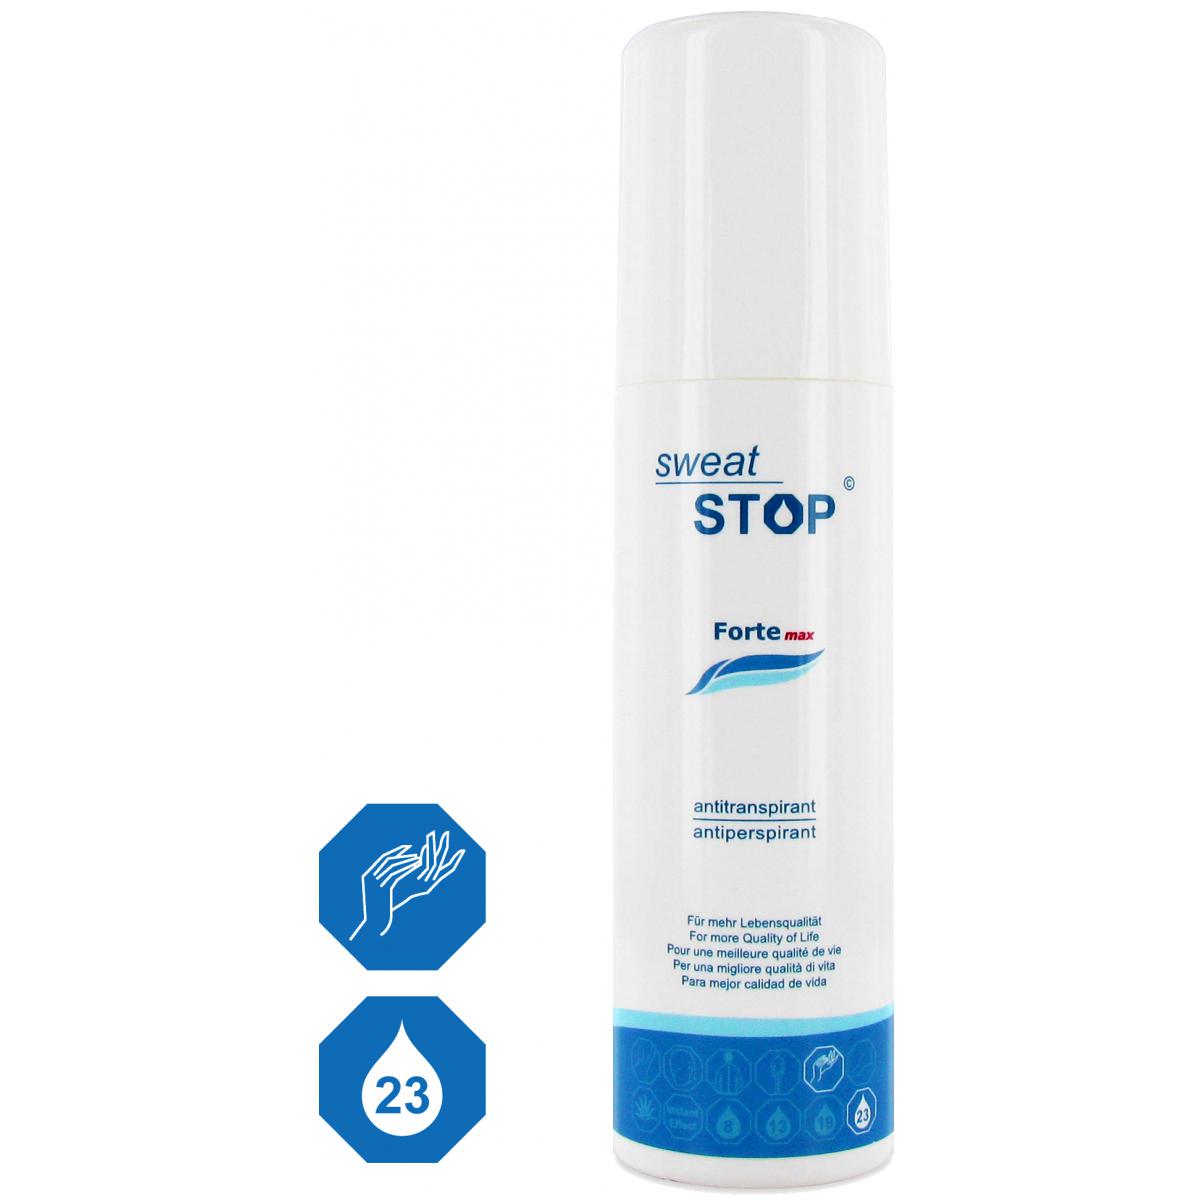 SweatStop® Forte max anti transpirant spray pour les mains The Powder Company